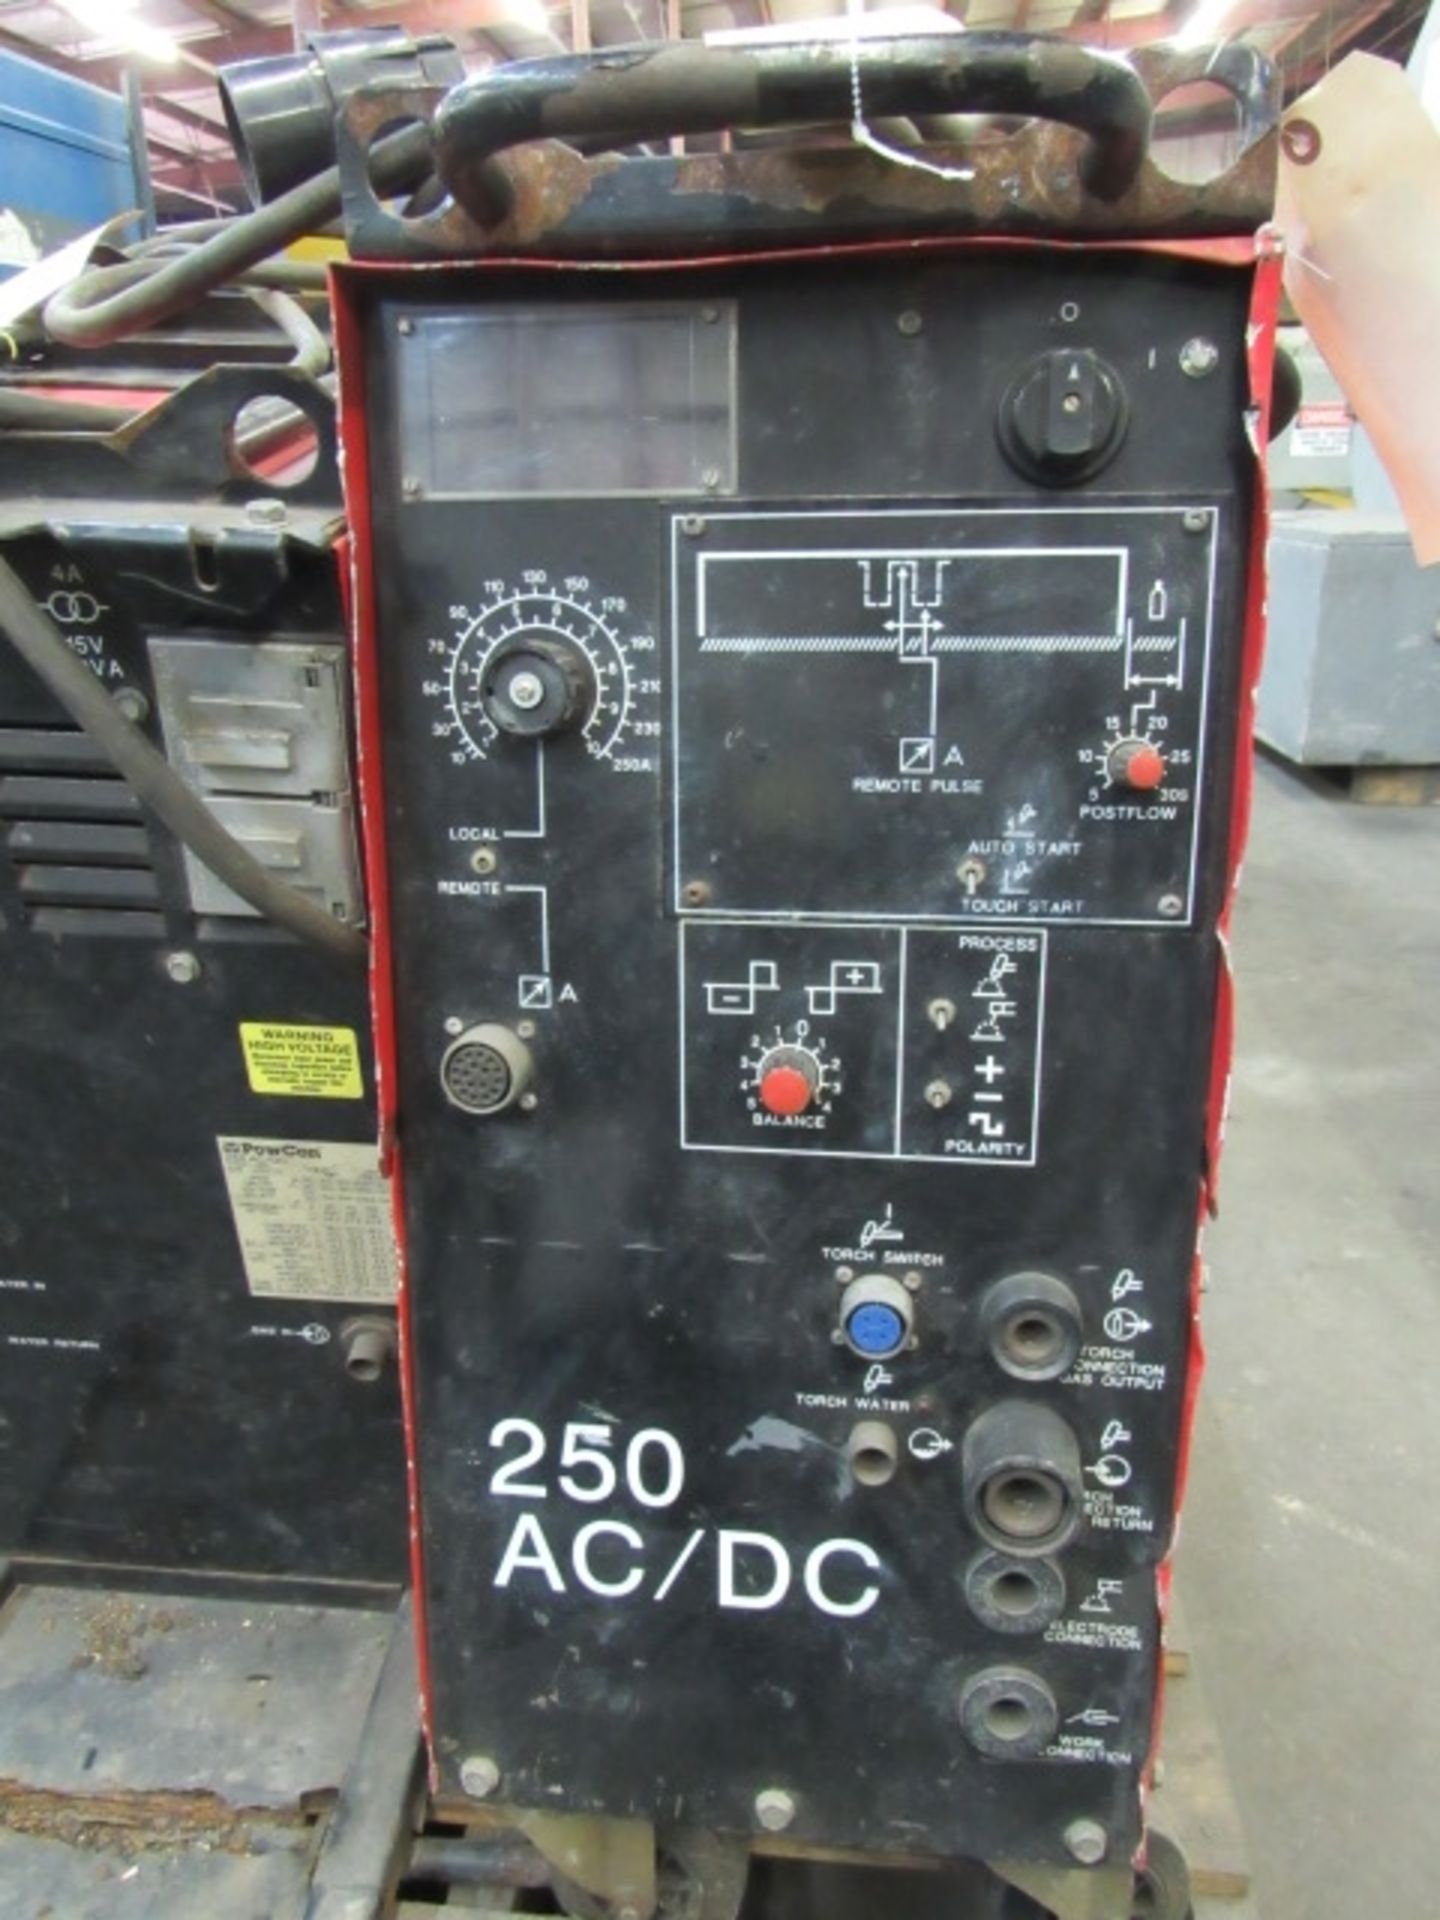 WELDING MACHINE, POWCON 250 AC/DC, S/N K202132 - Image 2 of 2